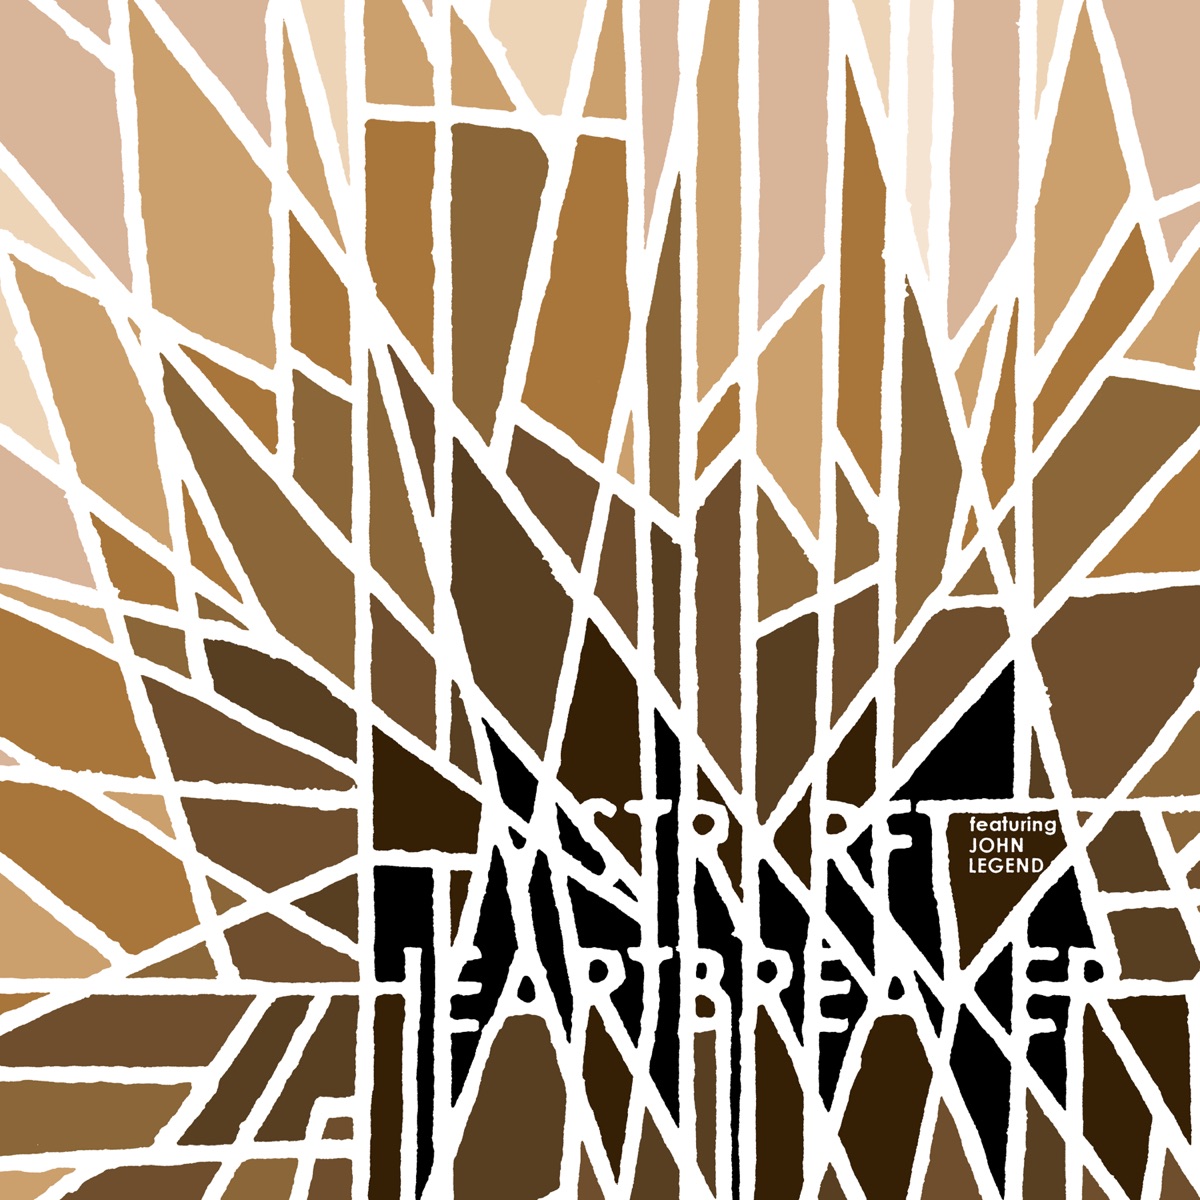 MSTRKRFT ft. featuring John Legend Heartbreaker cover artwork